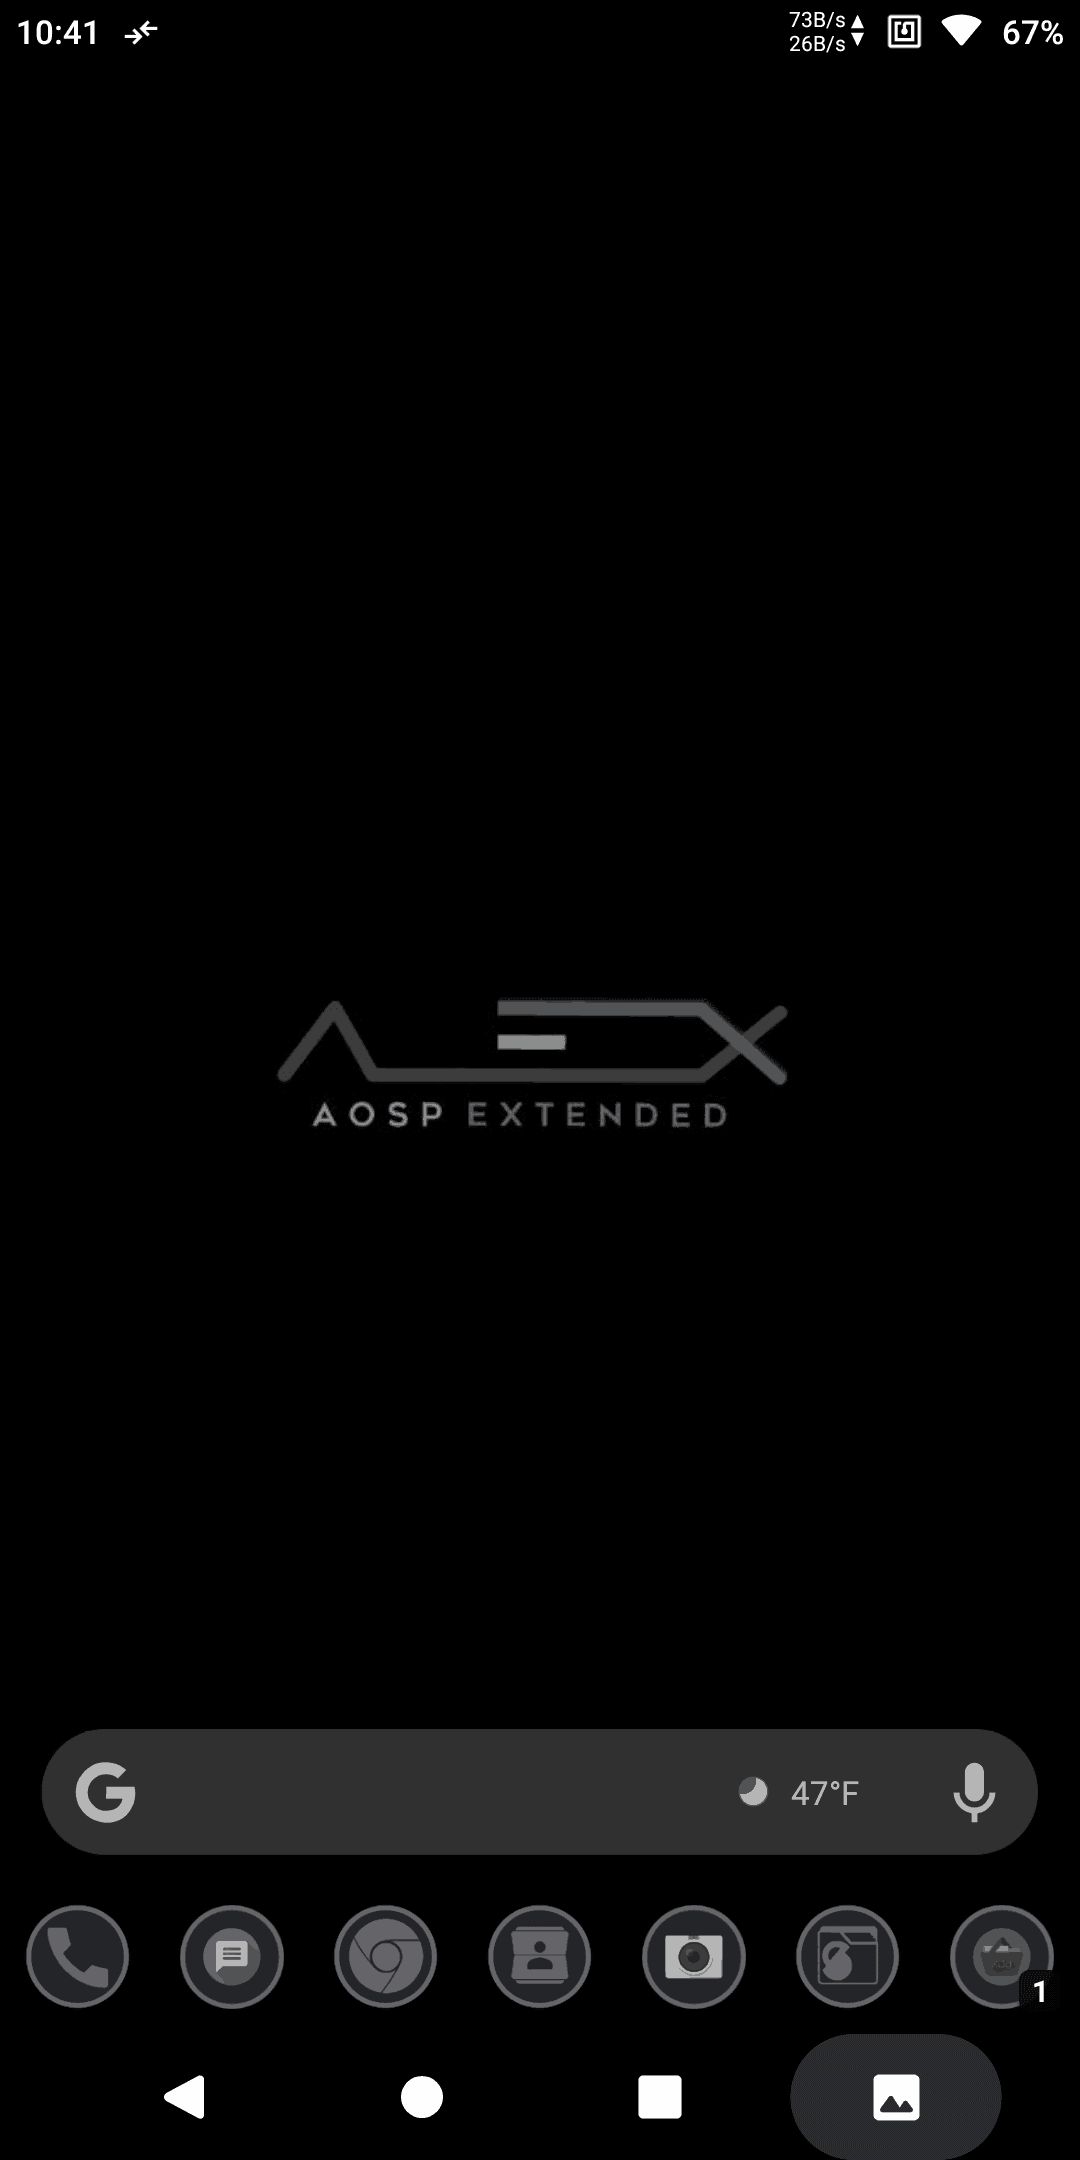 AOSP Extended